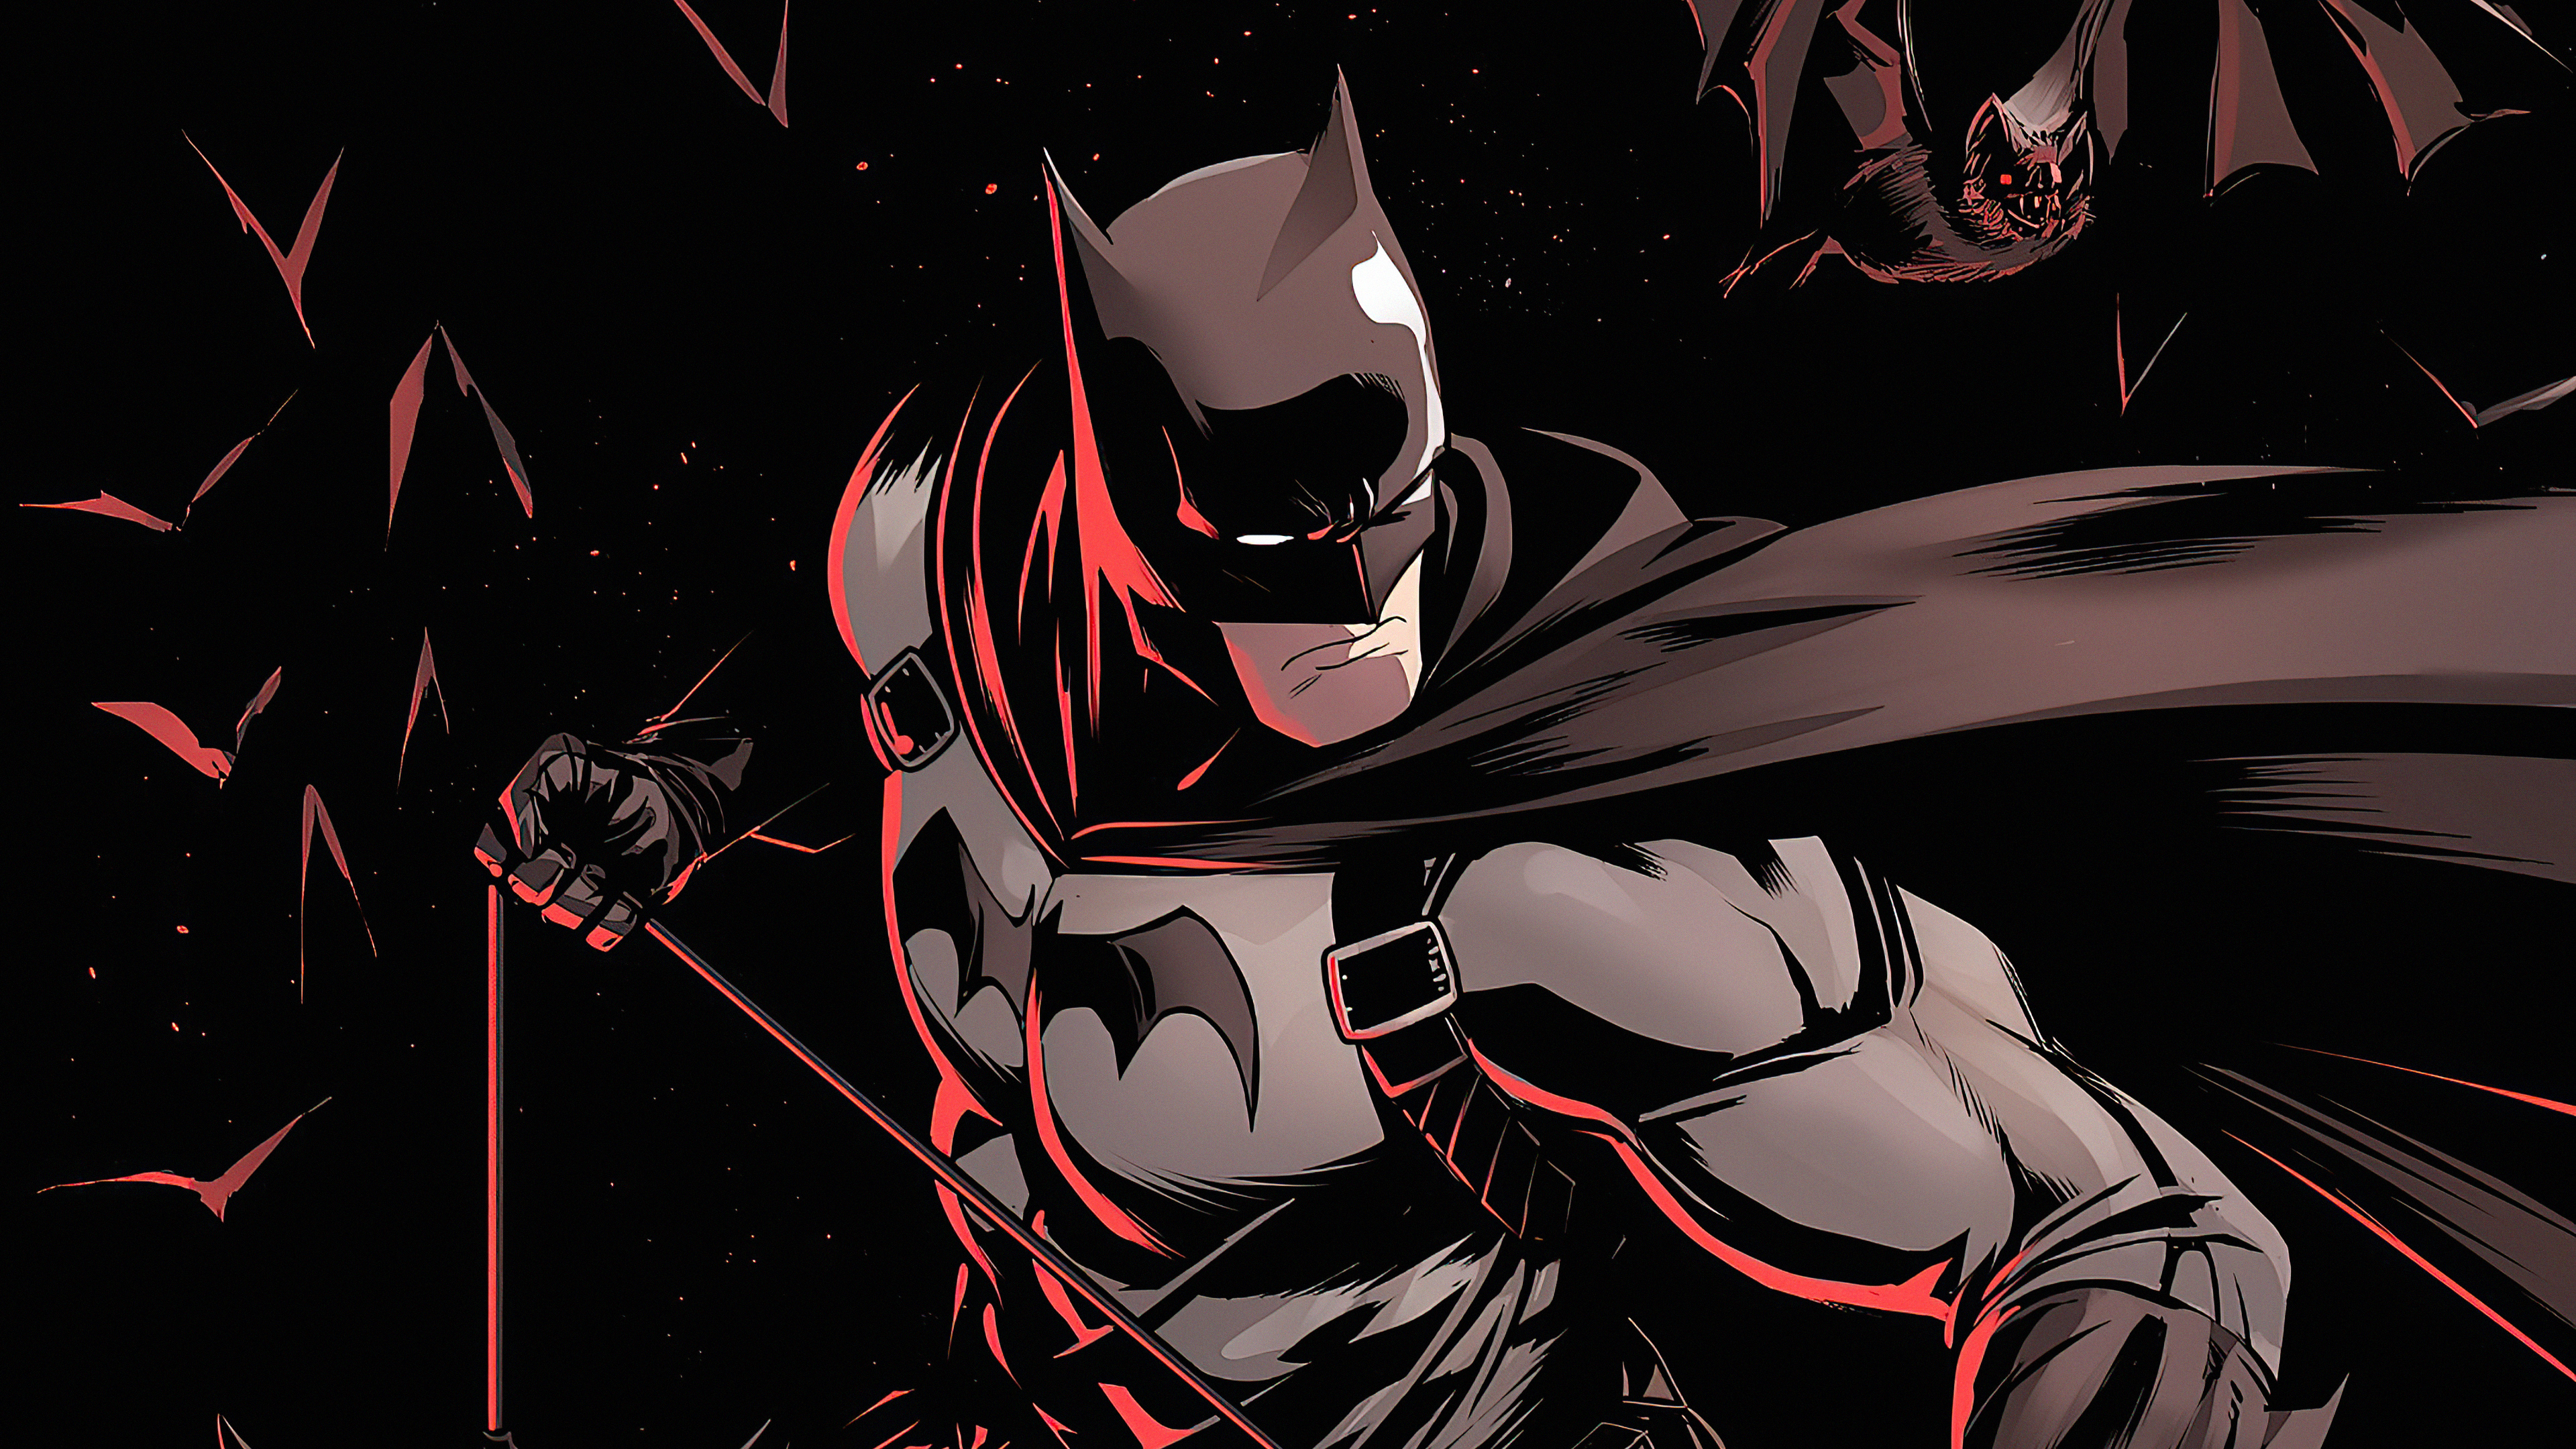 Batman 2020 DC Art Wallpaper, HD Superheroes 4K Wallpapers, Images, Photos  and Background - Wallpapers Den